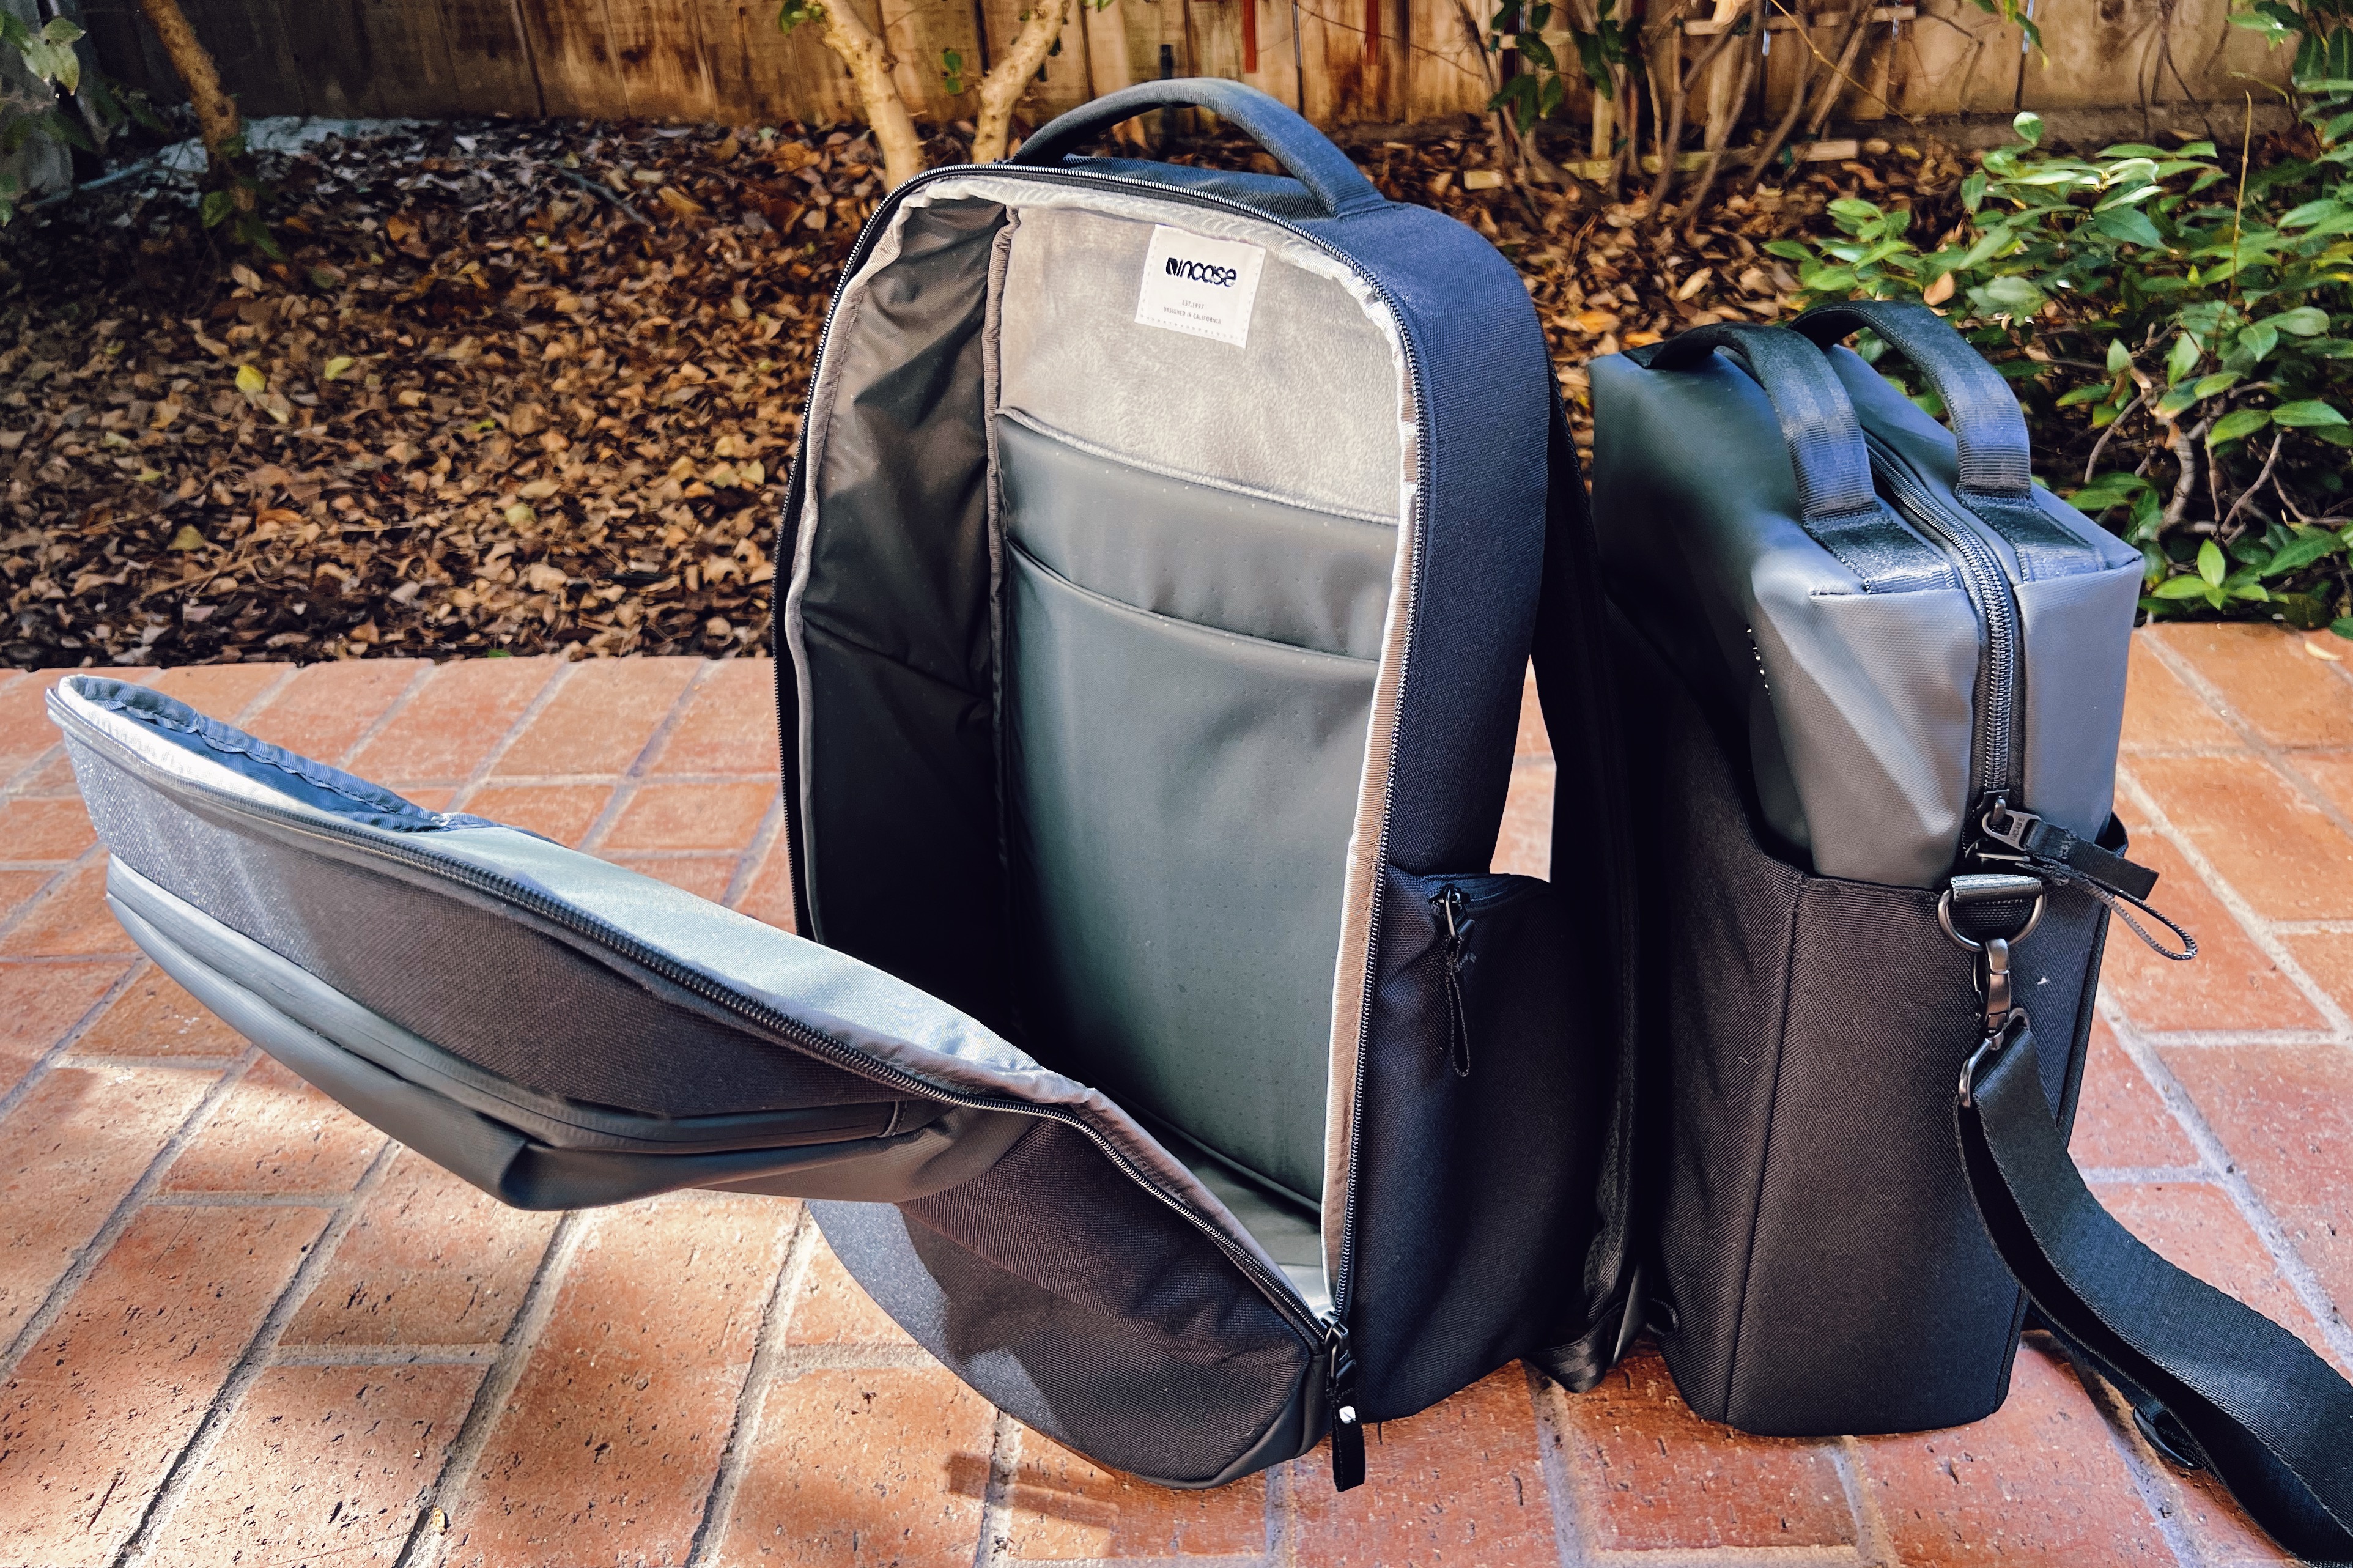 Review: Incase DSLR Pro Pack Backpack